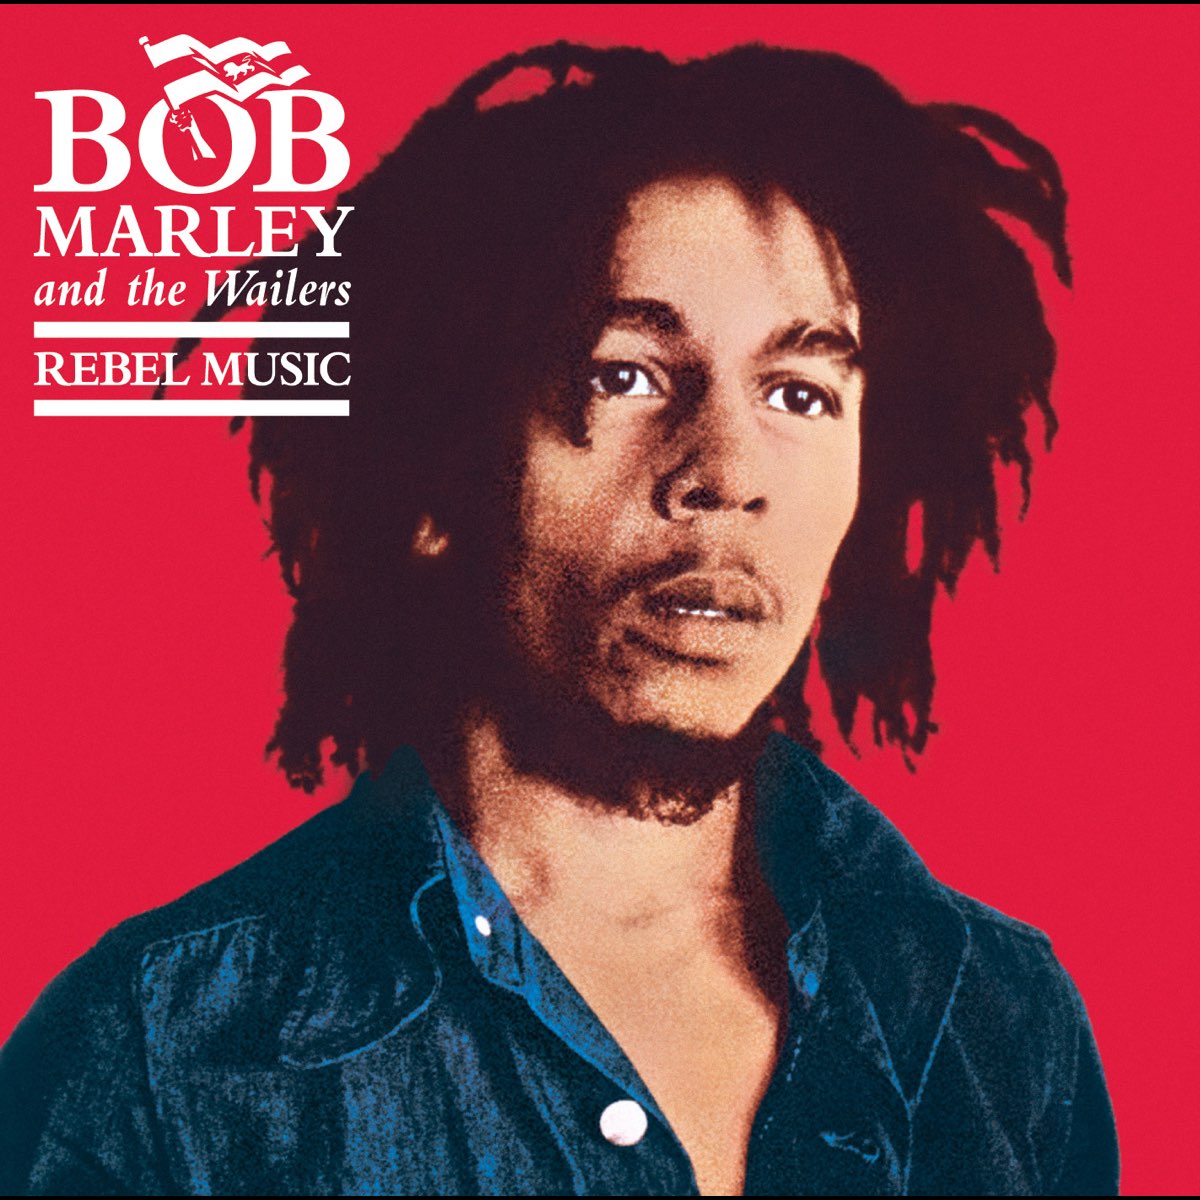 Rebel Music by Bob Marley & The Wailers on Apple Music